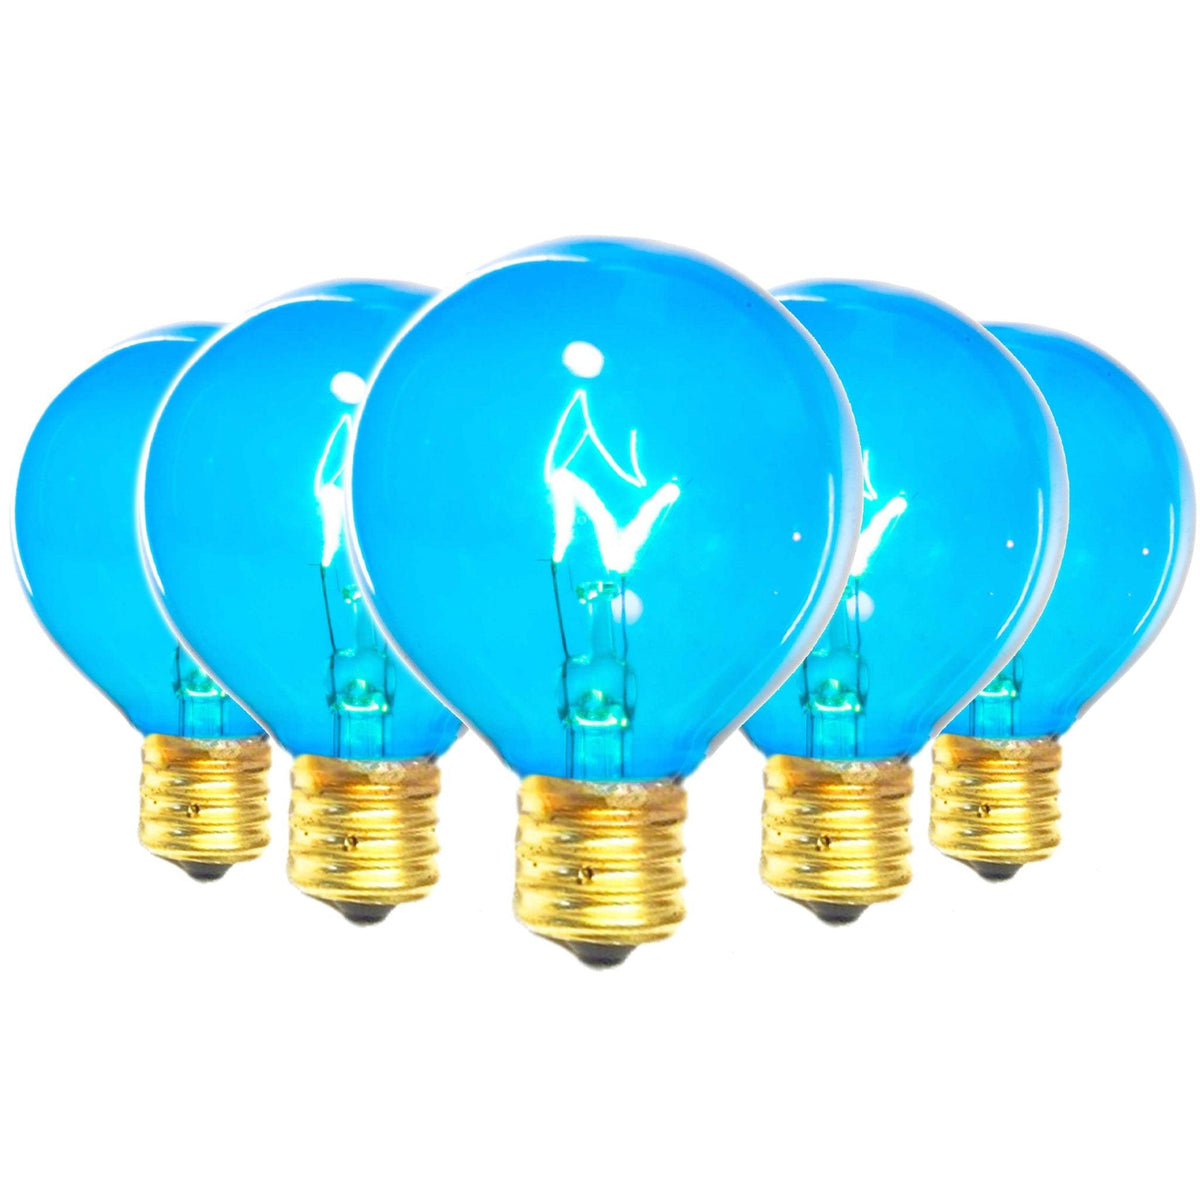 Lee Display's brand new box of 25 Blue G50 Incandescent Light Bulbs on sale now at leedisplay.com